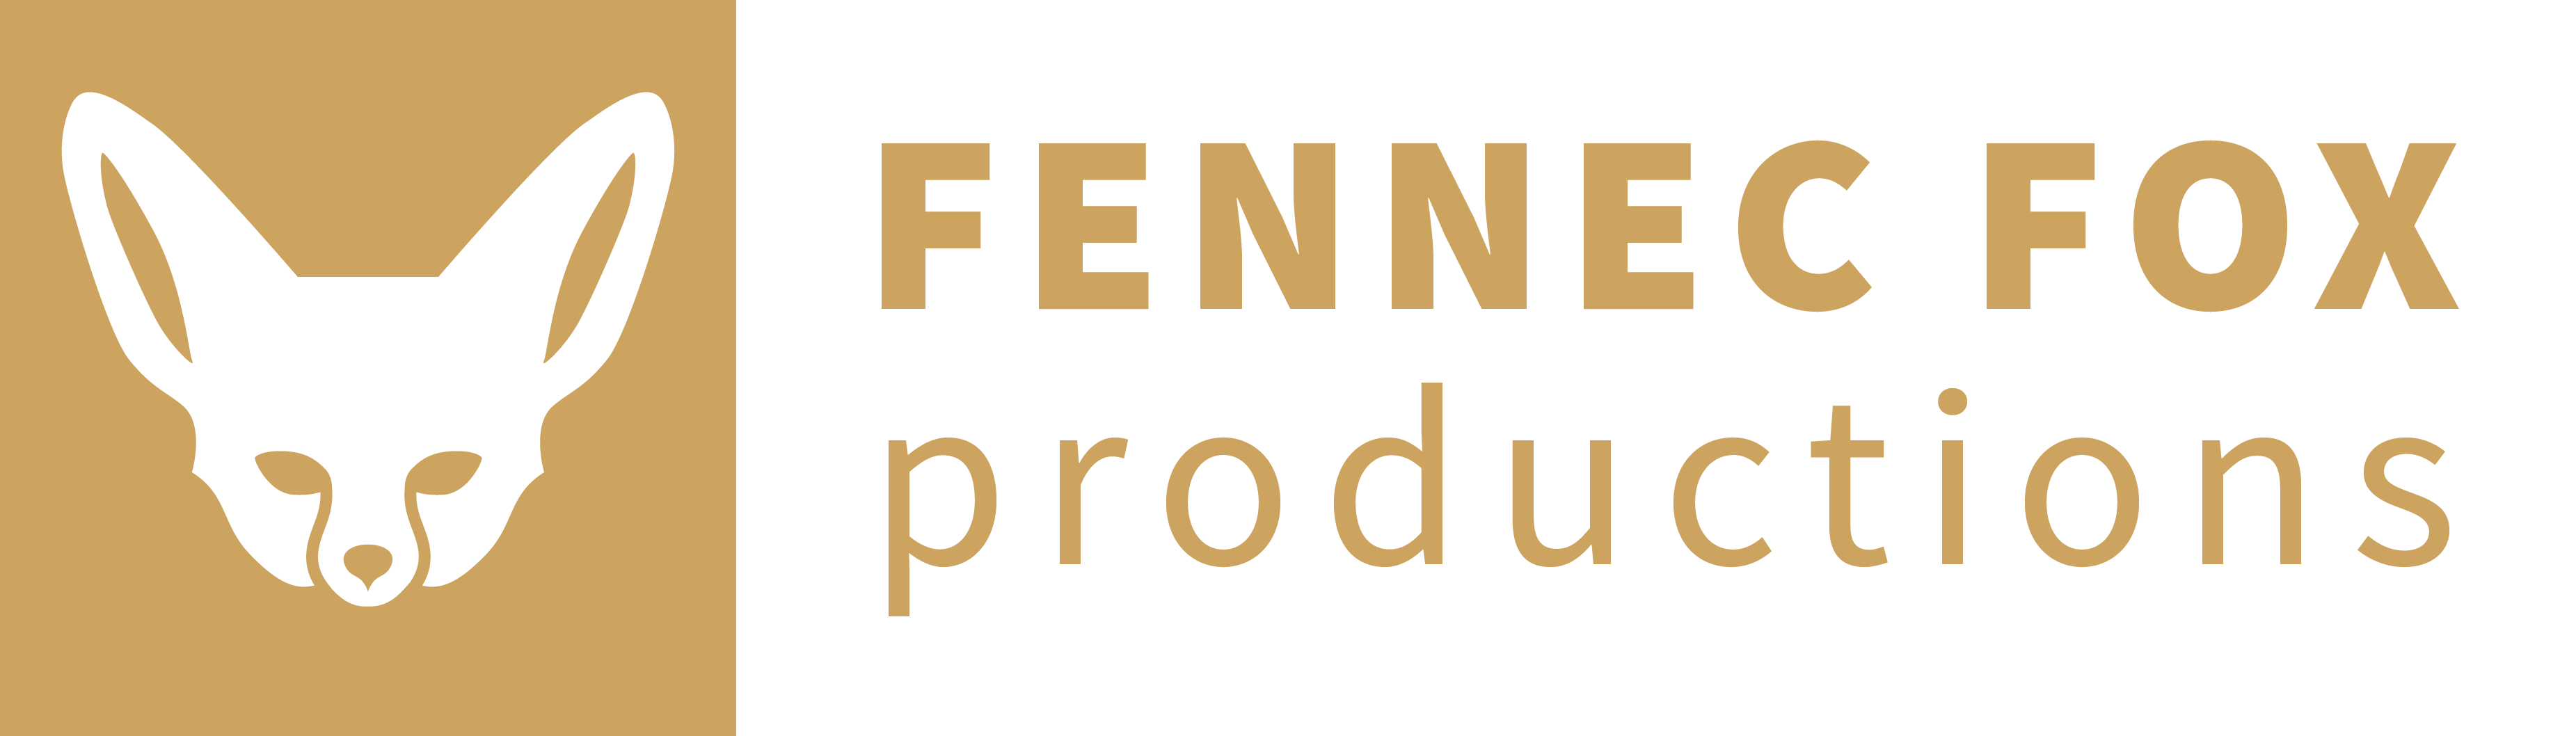 FENNEC FOX productions